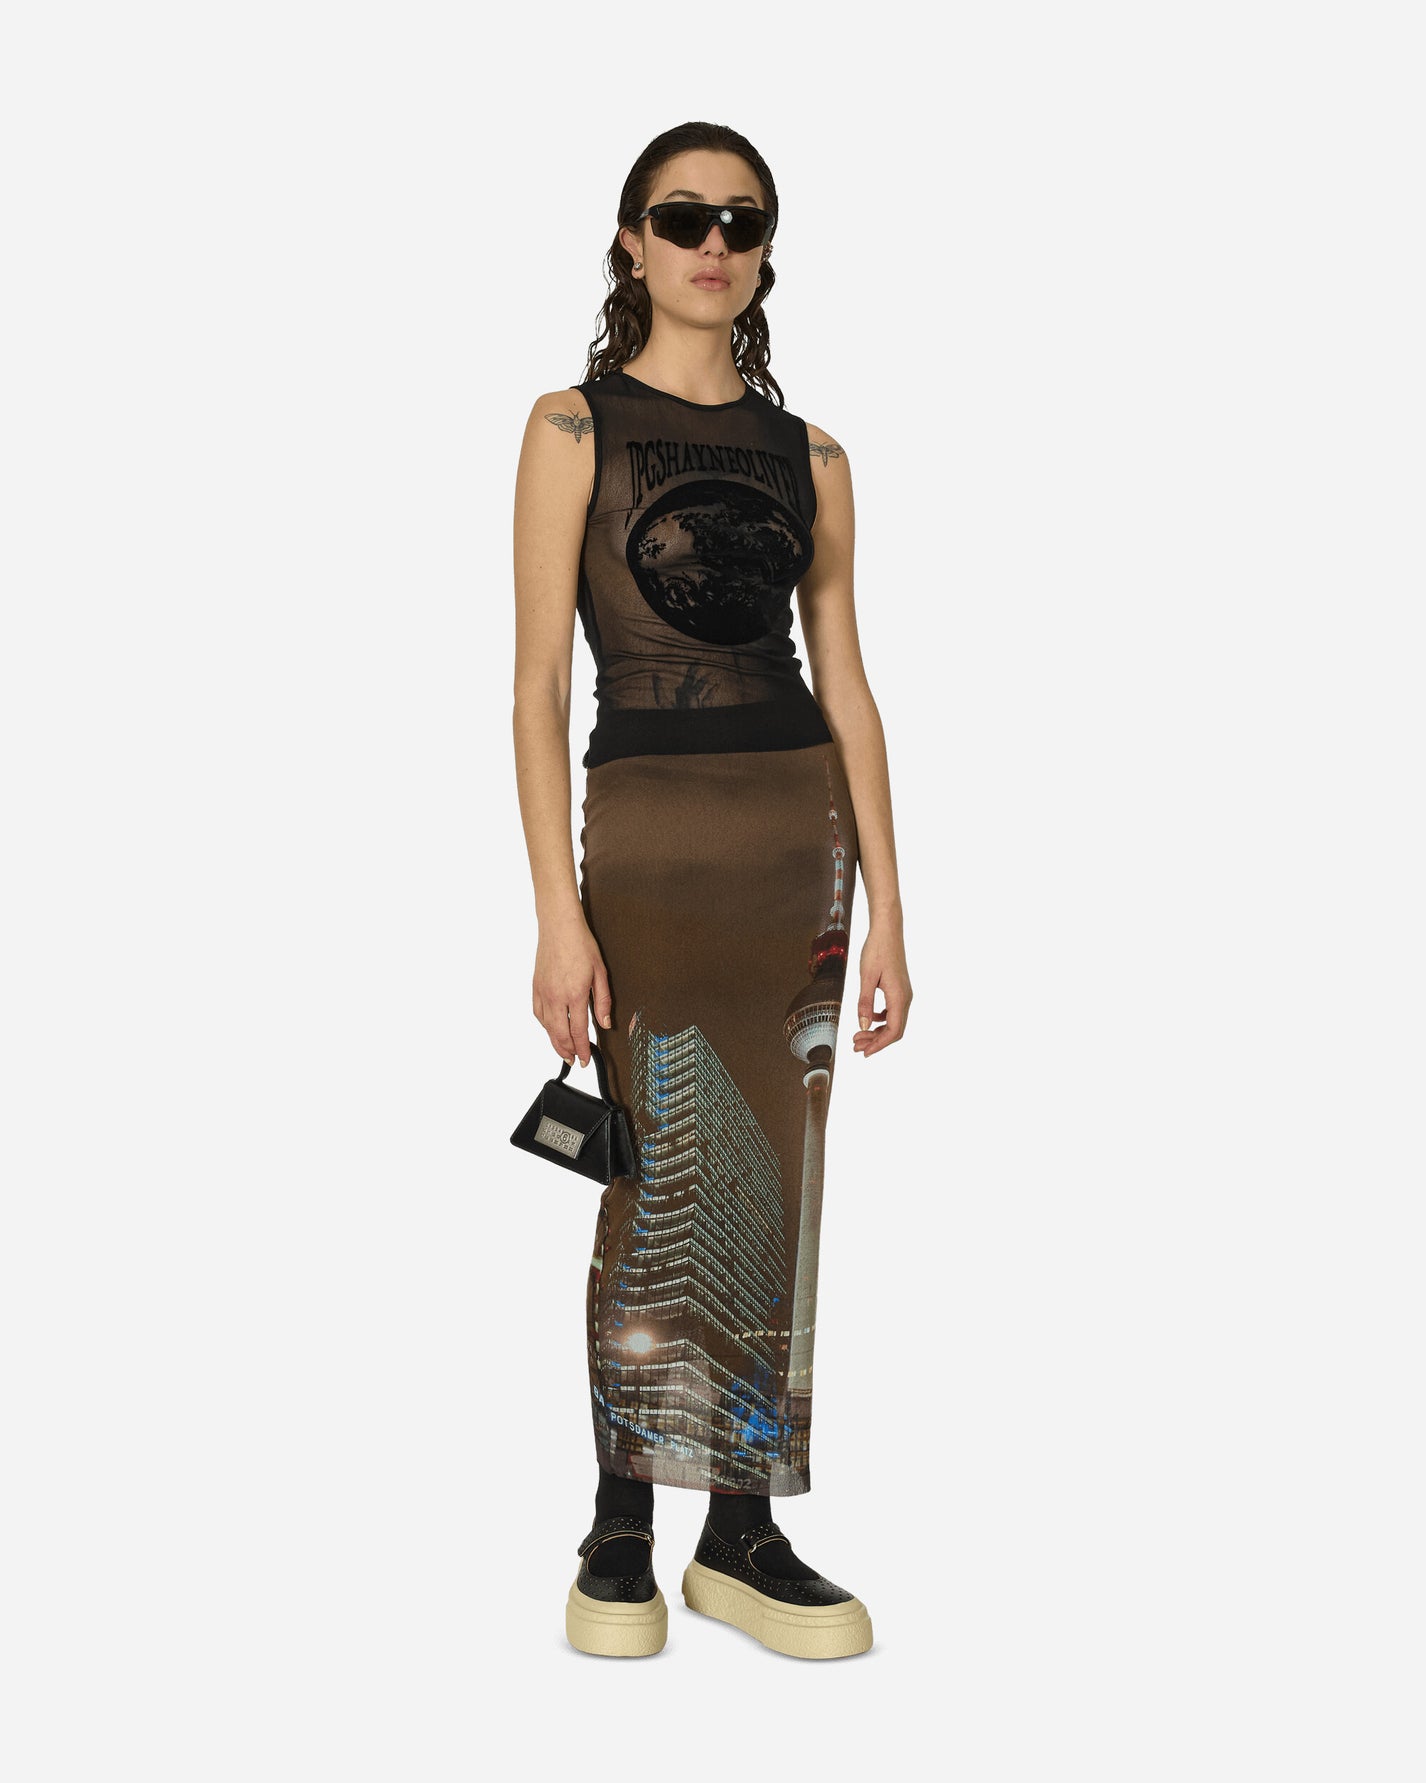 Jean Paul Gaultier Wmns Mesh Long Skirt Printed City Brown/Green Skirts Midi JU097-T551 60405030